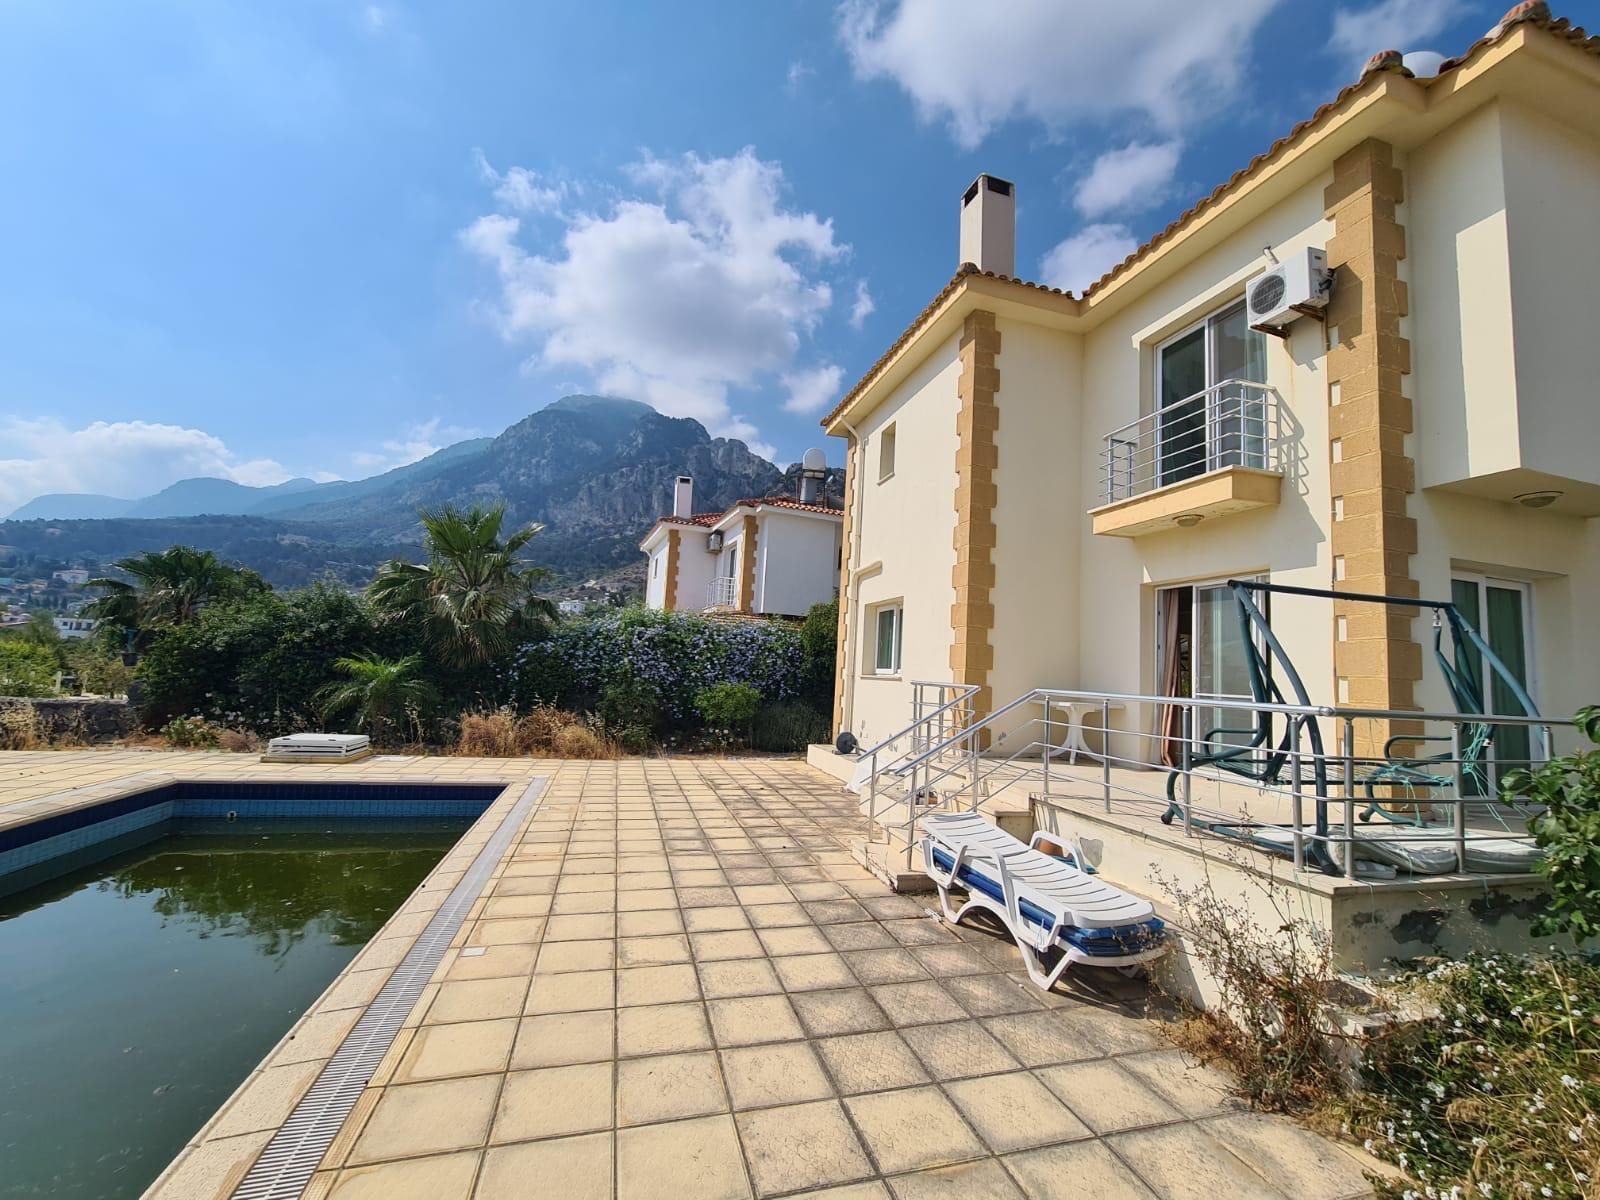 3 bedroom villa for sale in Kyrenia, Karshiyaka-5a256fae-3f16-4d78-9a27-585339d4e780